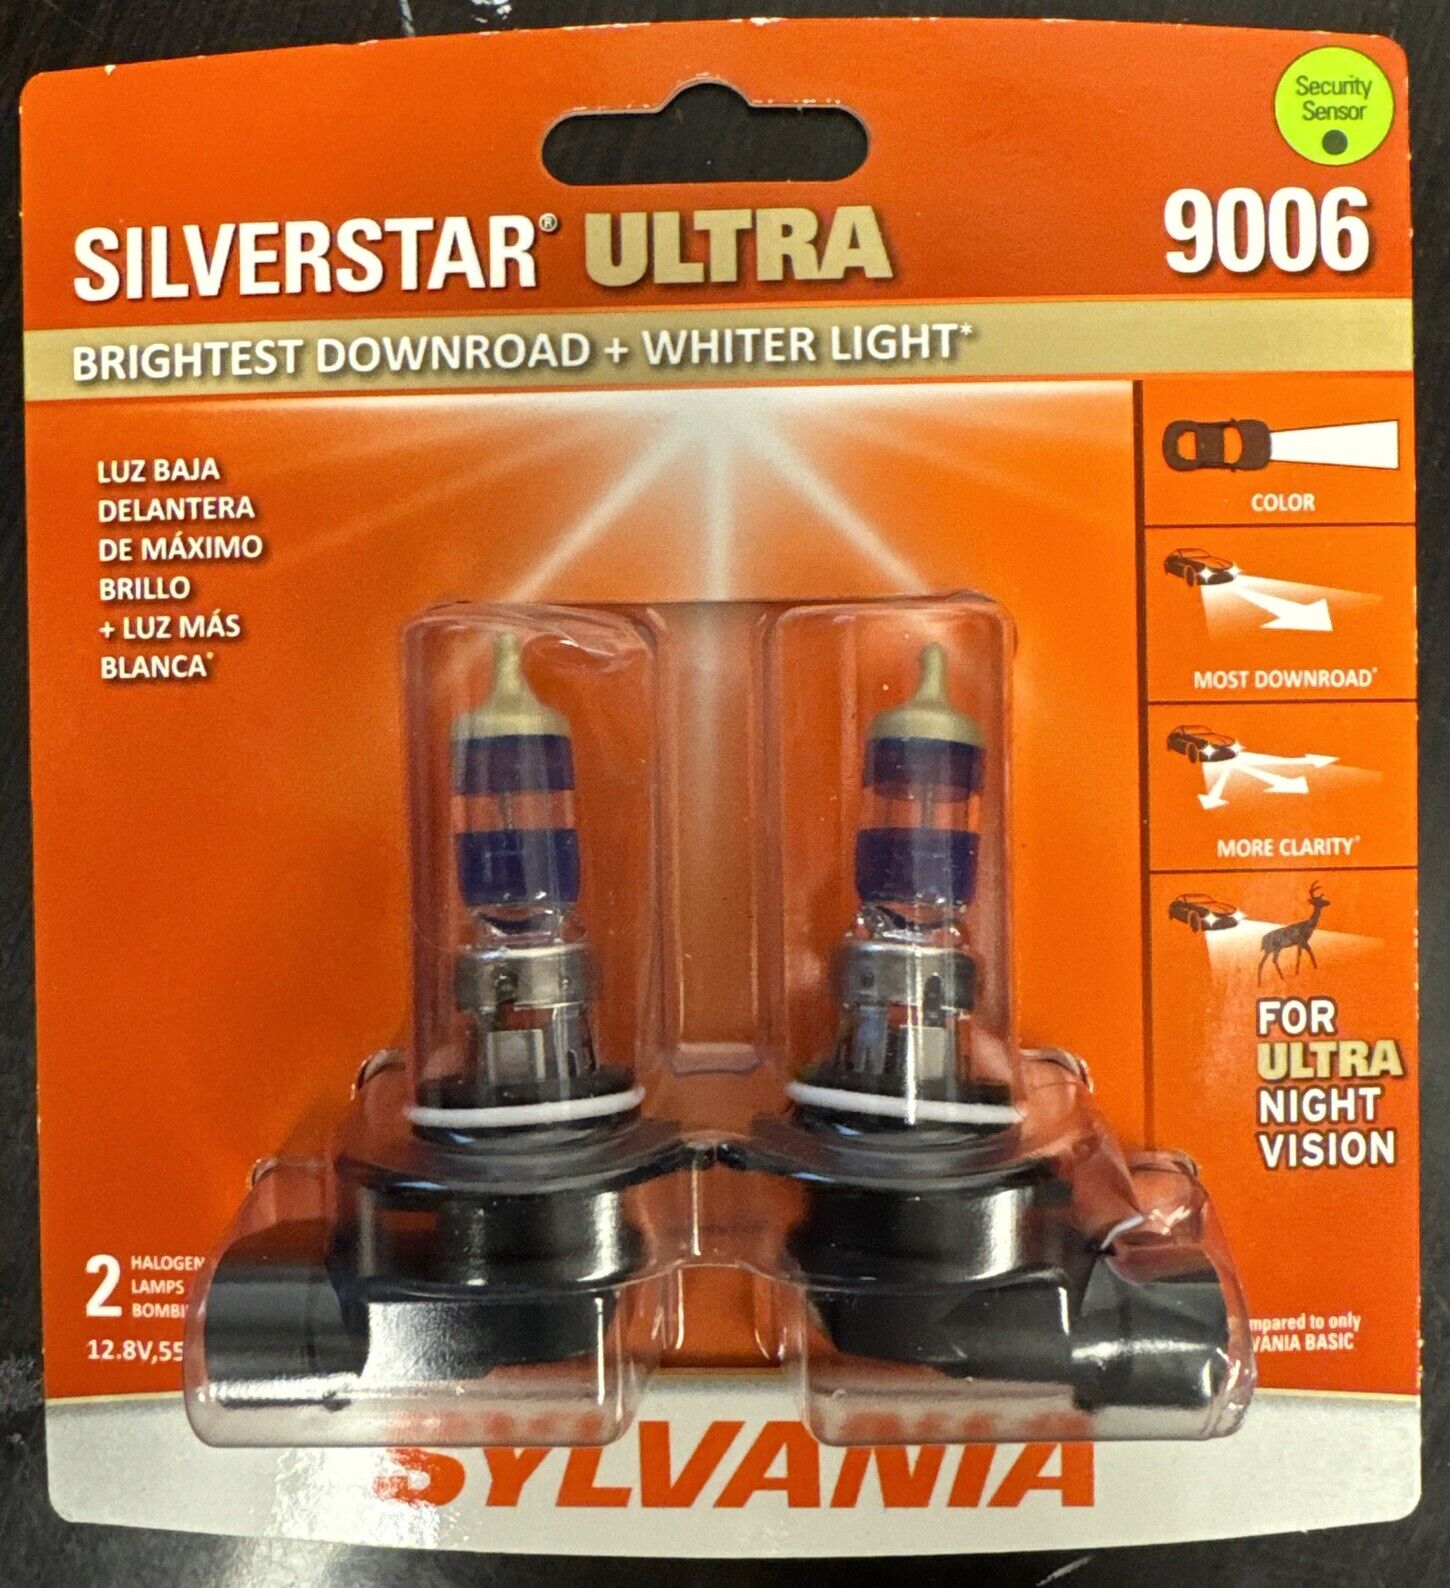 2 NEW SEALED Sylvania SilverStar Ultra 9006 12.8V 55W Whiter Light *LOW PRICED*